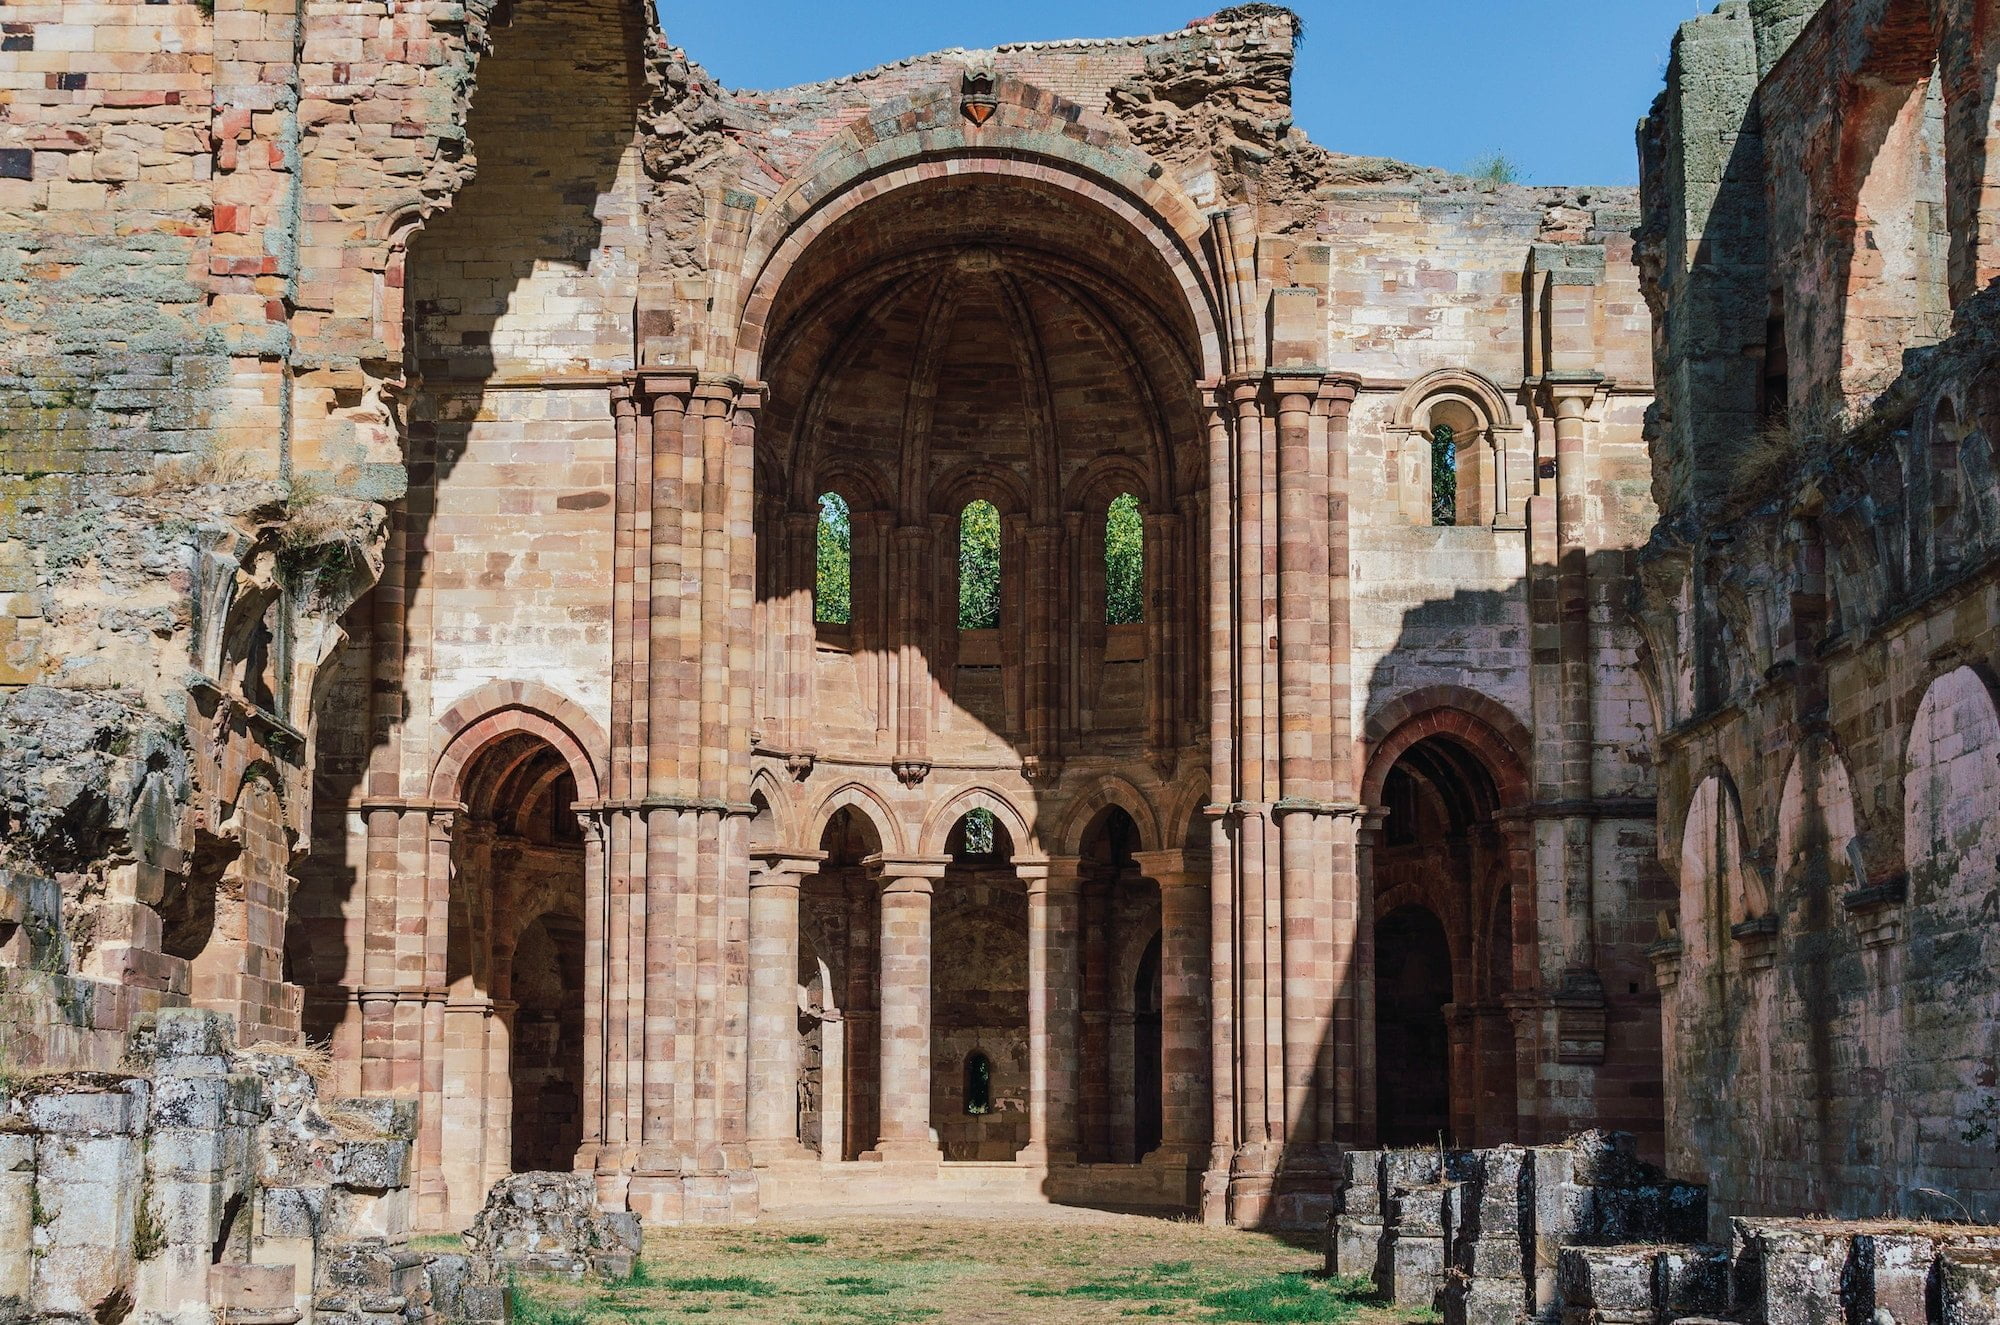 Closeup shot of the Monasterio Santa Maria de Moreruela in Granja de Moreruela Zamora Spain